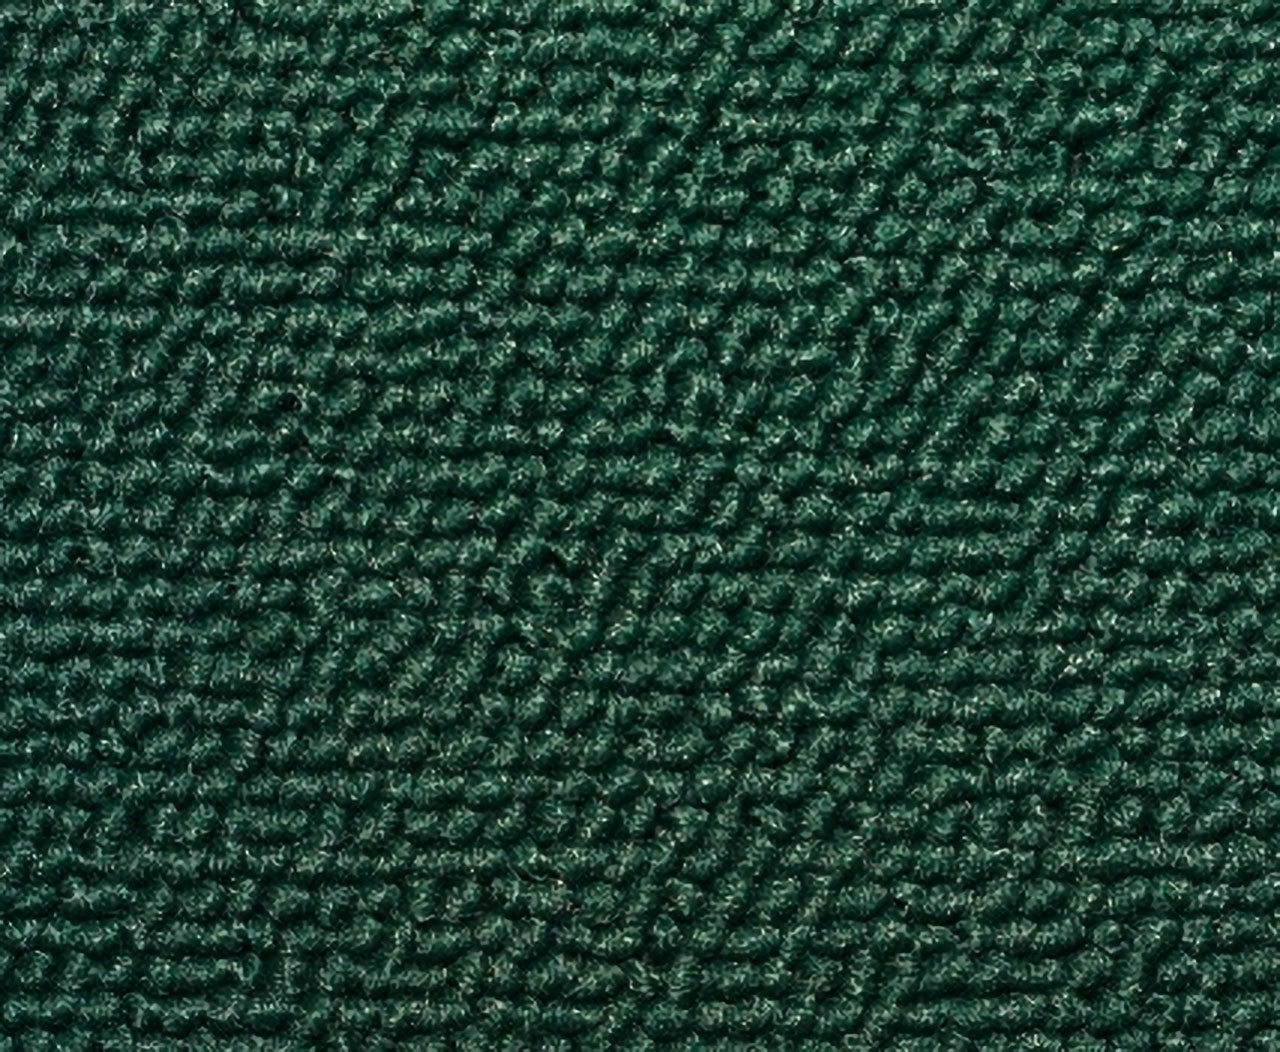 Holden Standard EH Standard Wagon C26 Triton Green Carpet (Image 1 of 1)